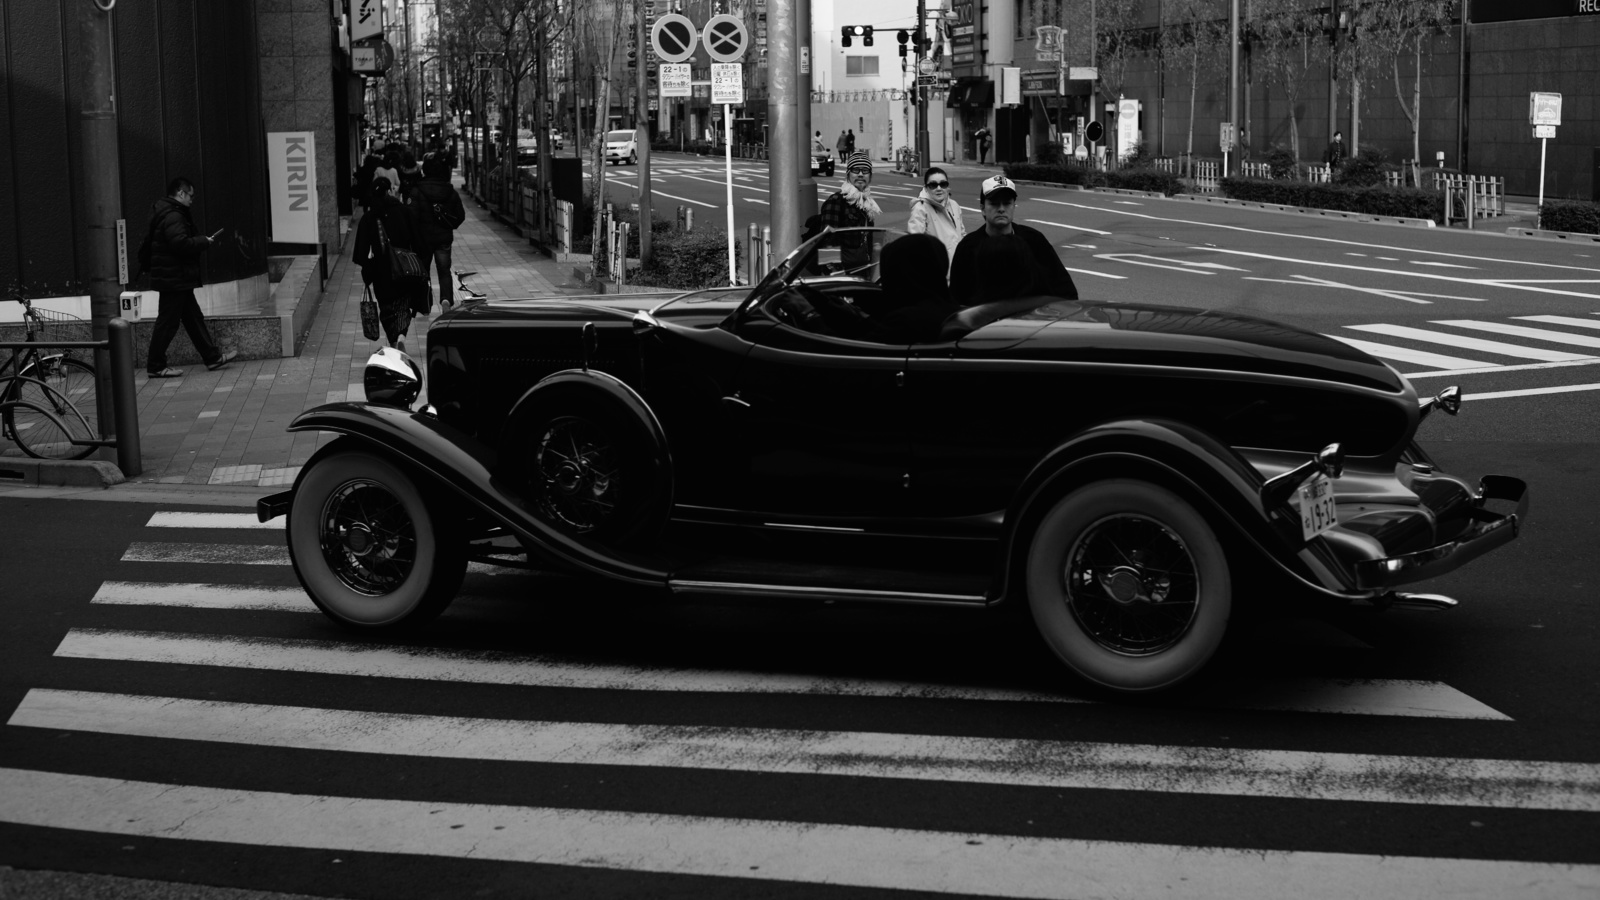 japan, leica, vintage car, tokyo, hot rod, sedan